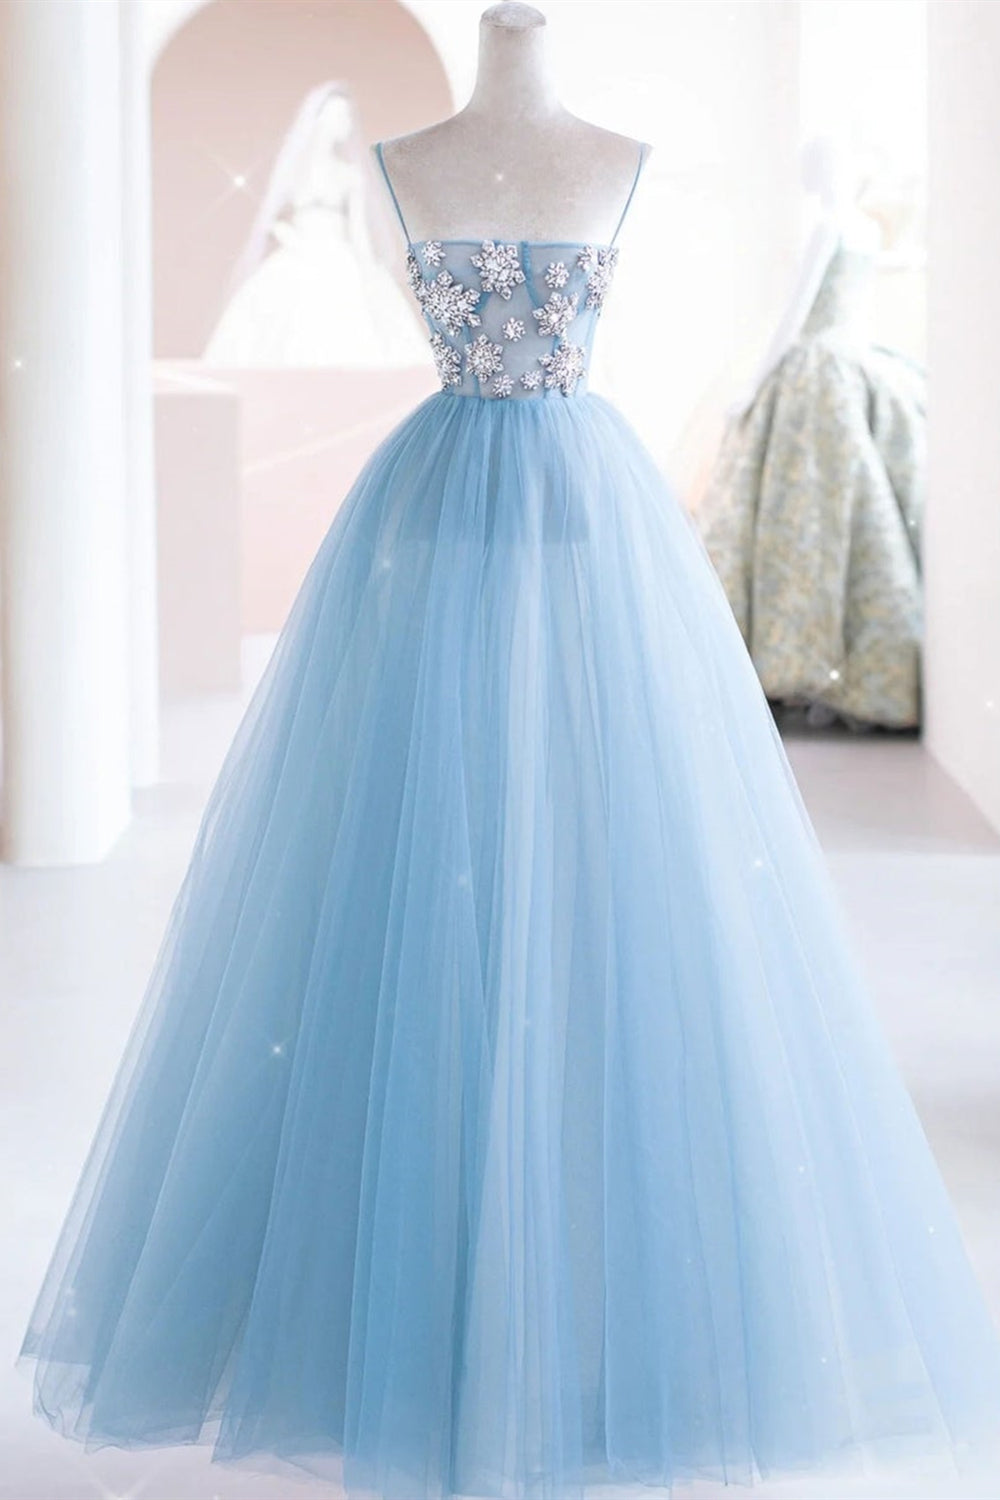 A Line Open Back Light Blue Tulle Long Prom Dresses with Beaded Flowers, Beaded Light Blue Tulle Formal Evening Dresses